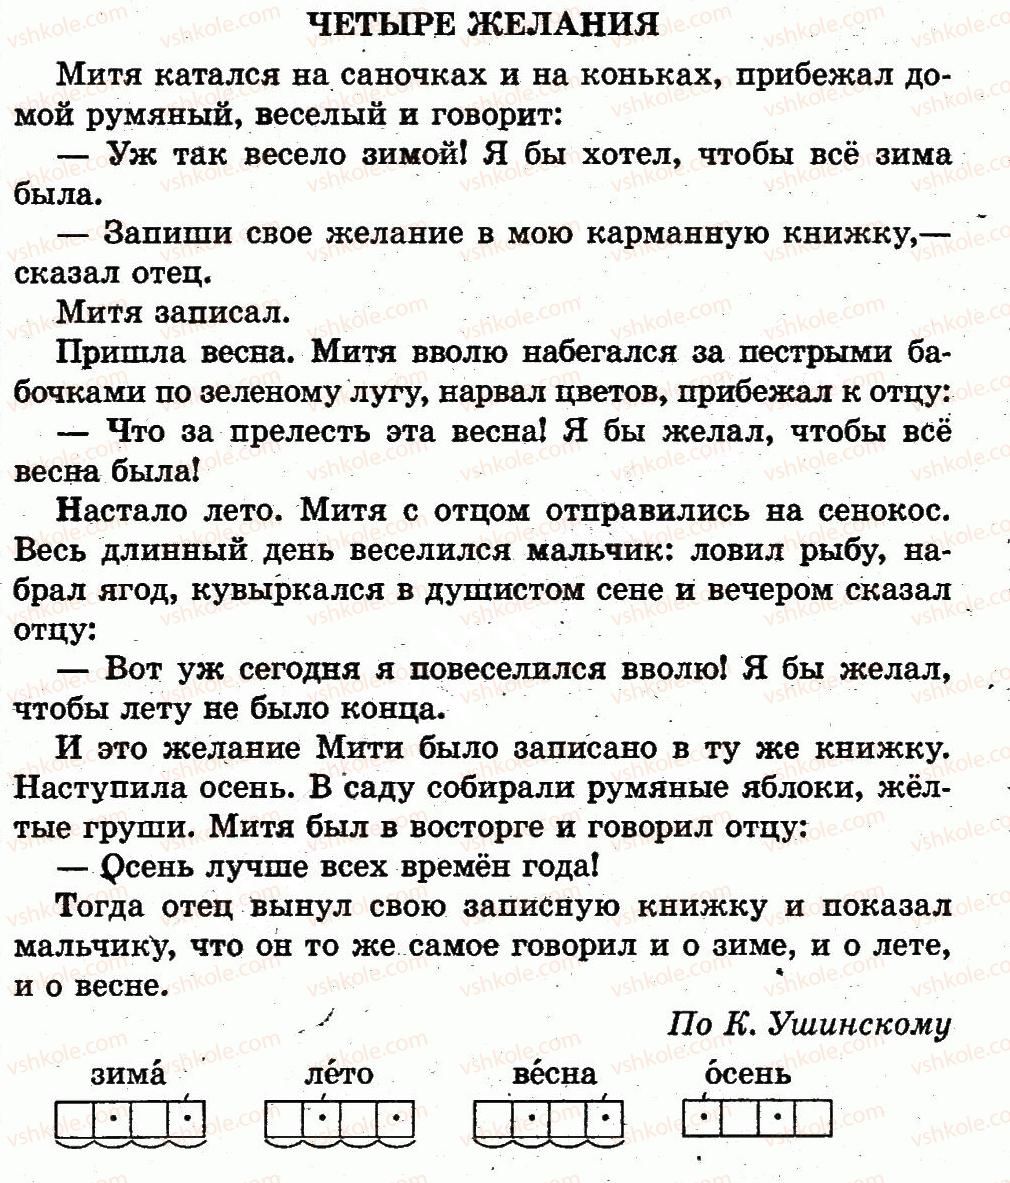 1-russkij-yazyk-in-lapshina-nn-zorka-2012--vremya-sutki-страница82.jpg